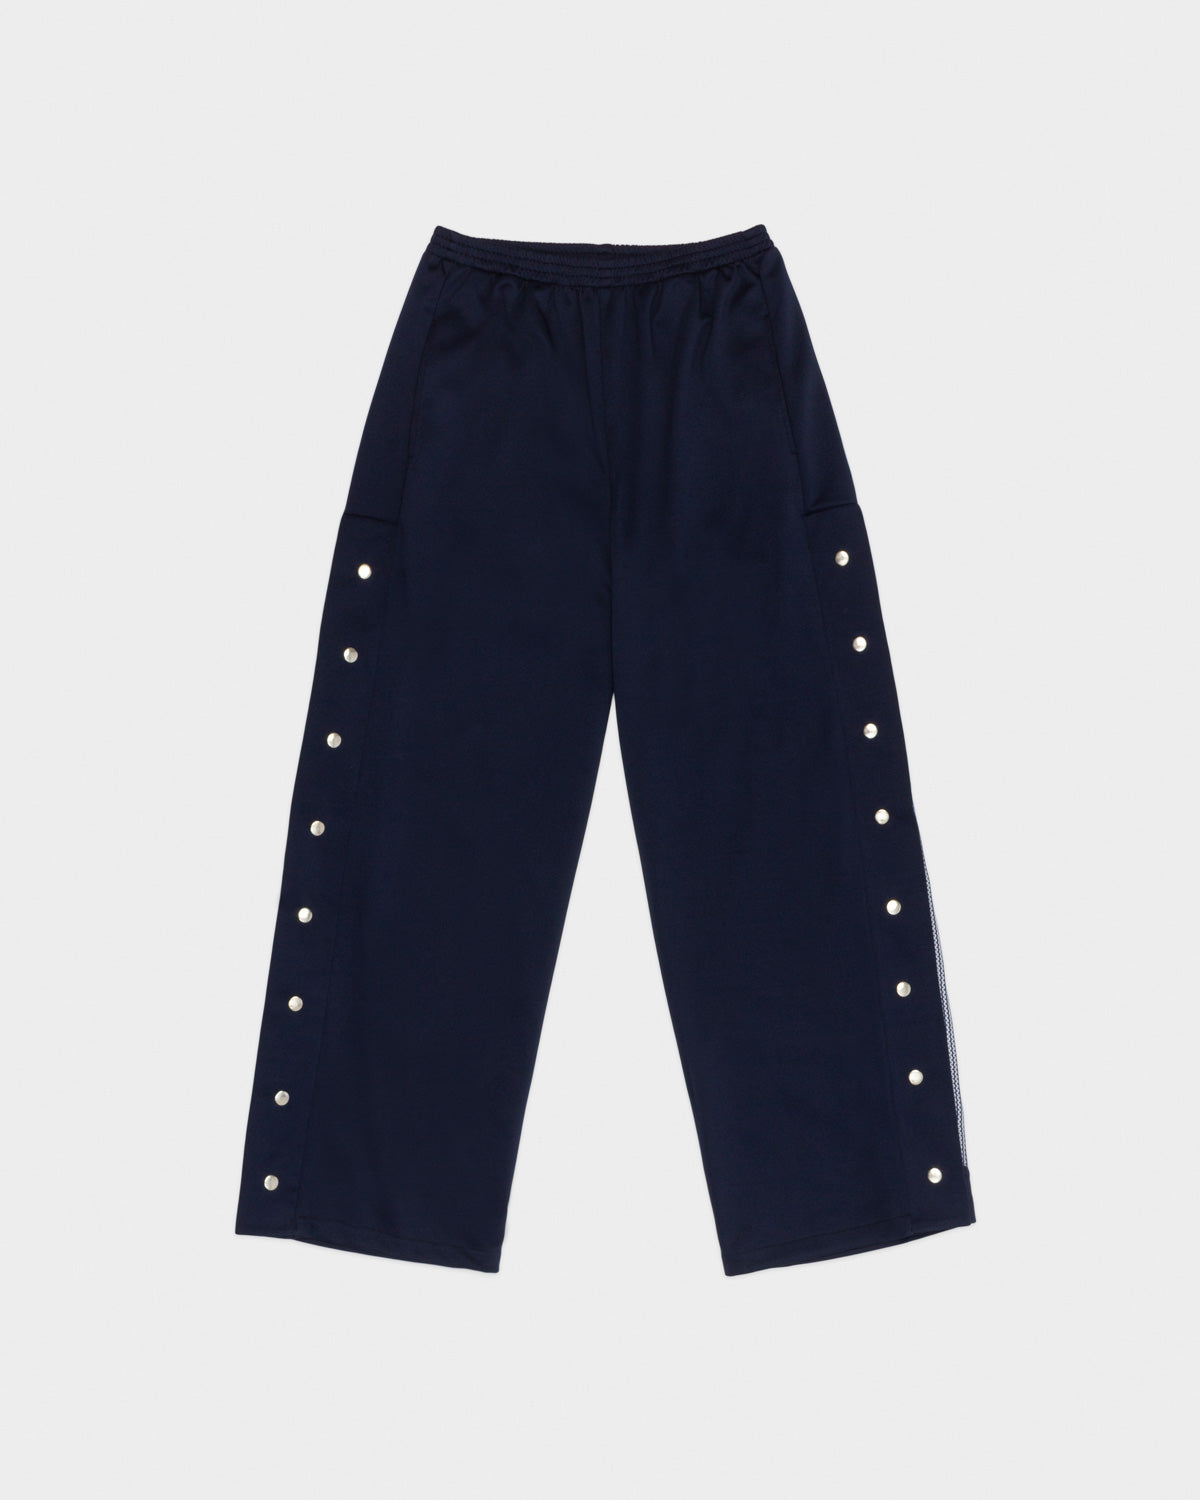 Navy Gym Pants